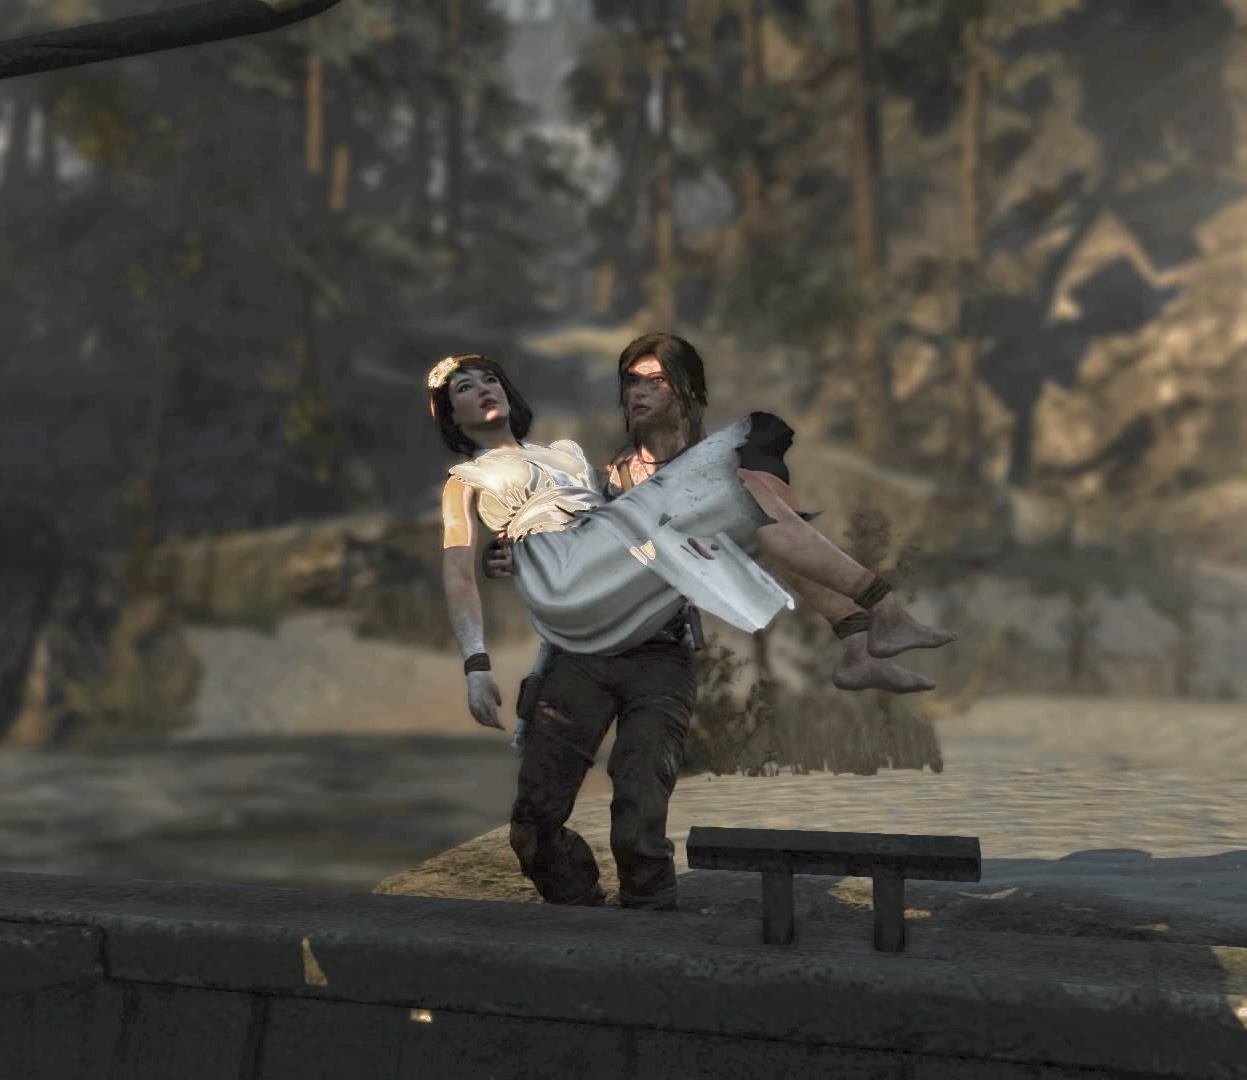 Lara Croft carrying Sam